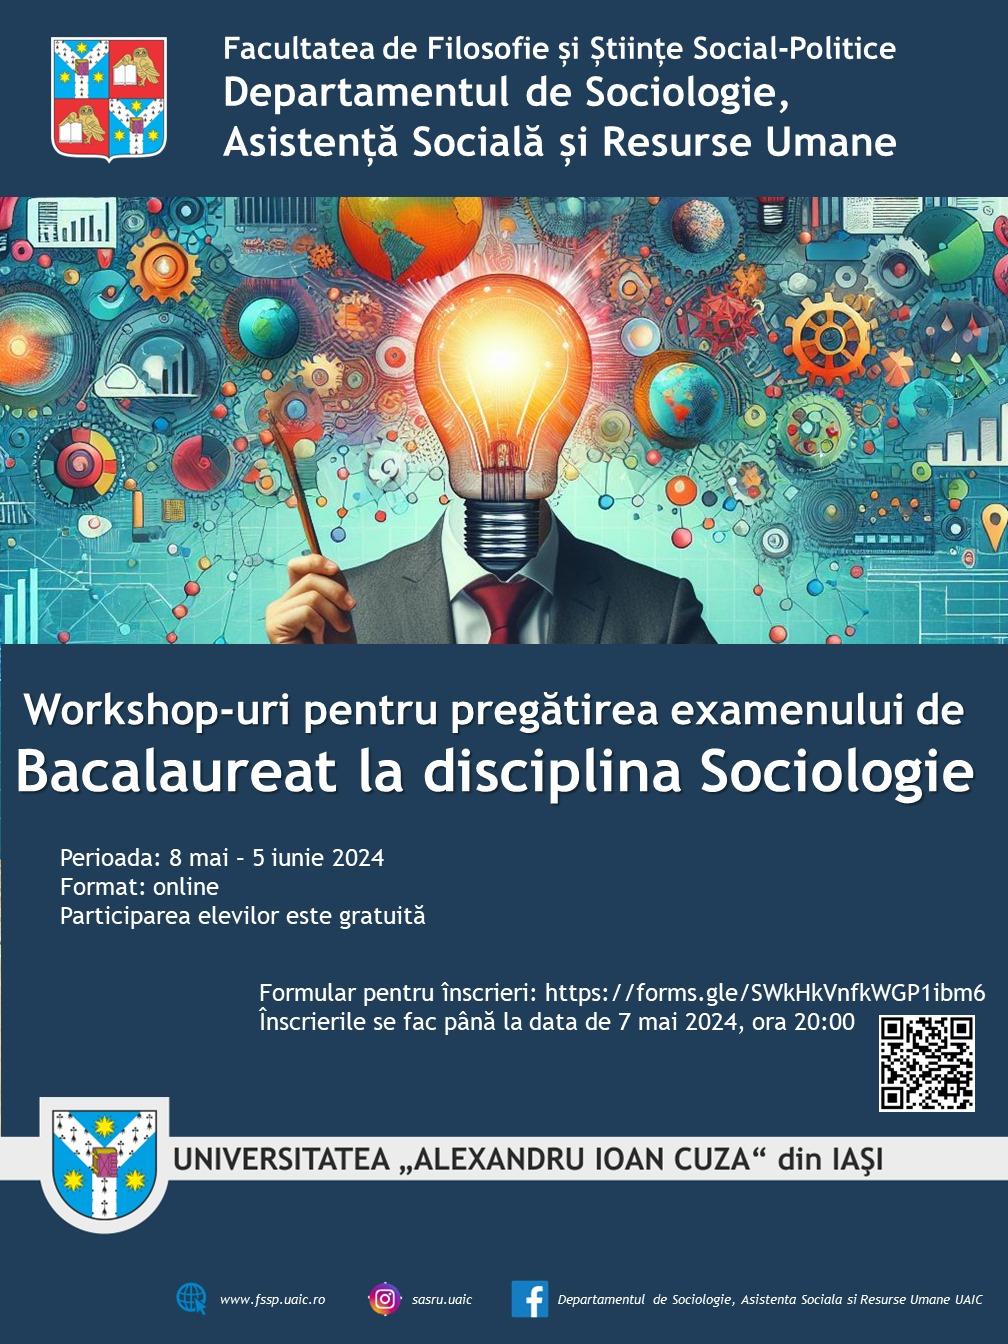 Bacalaureat la disciplina Sociologie - seria de workshop-uri